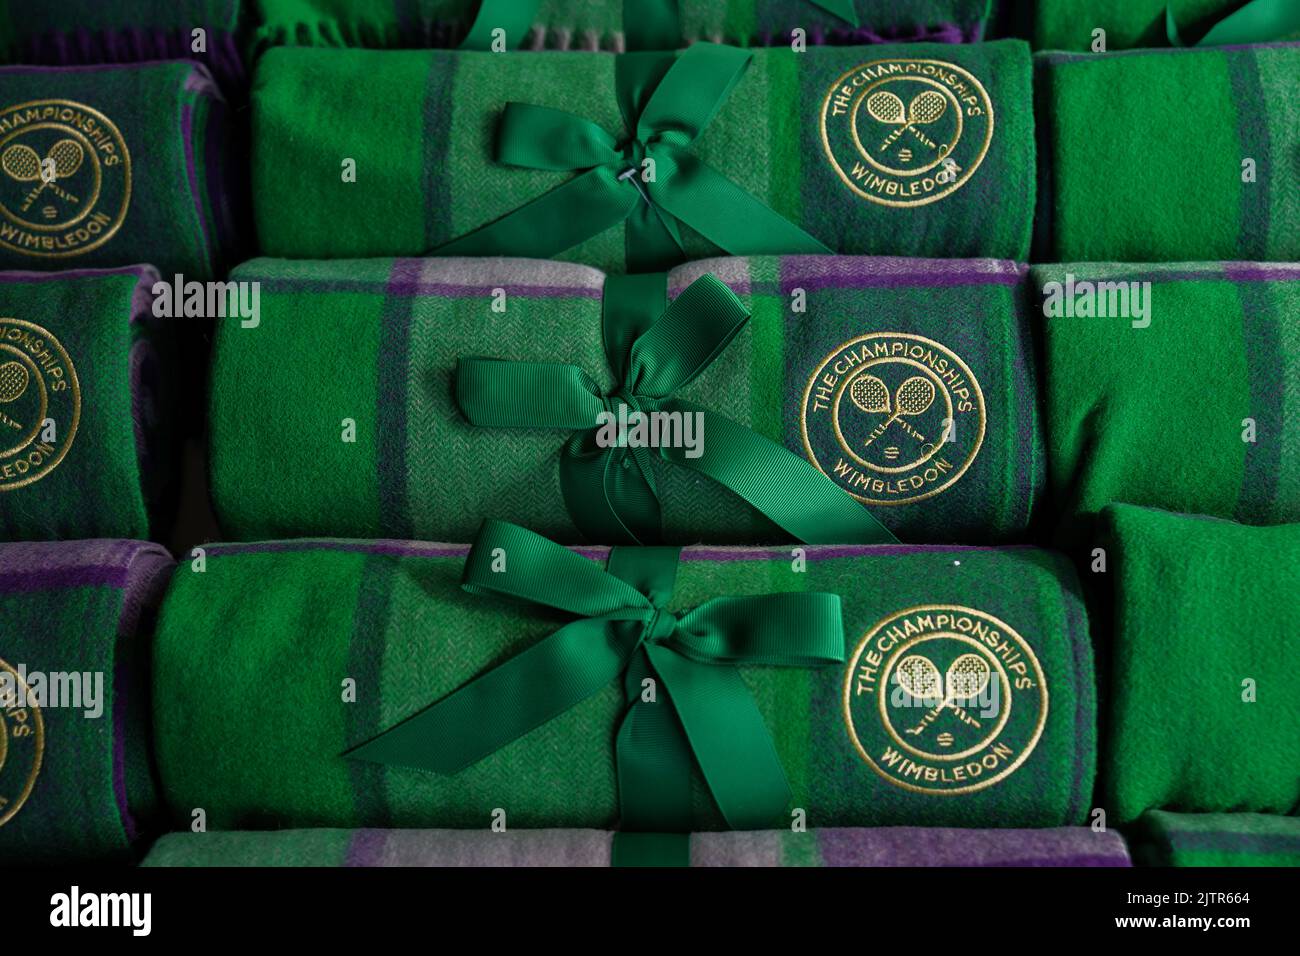 Wimbledon branded blankets Stock Photo